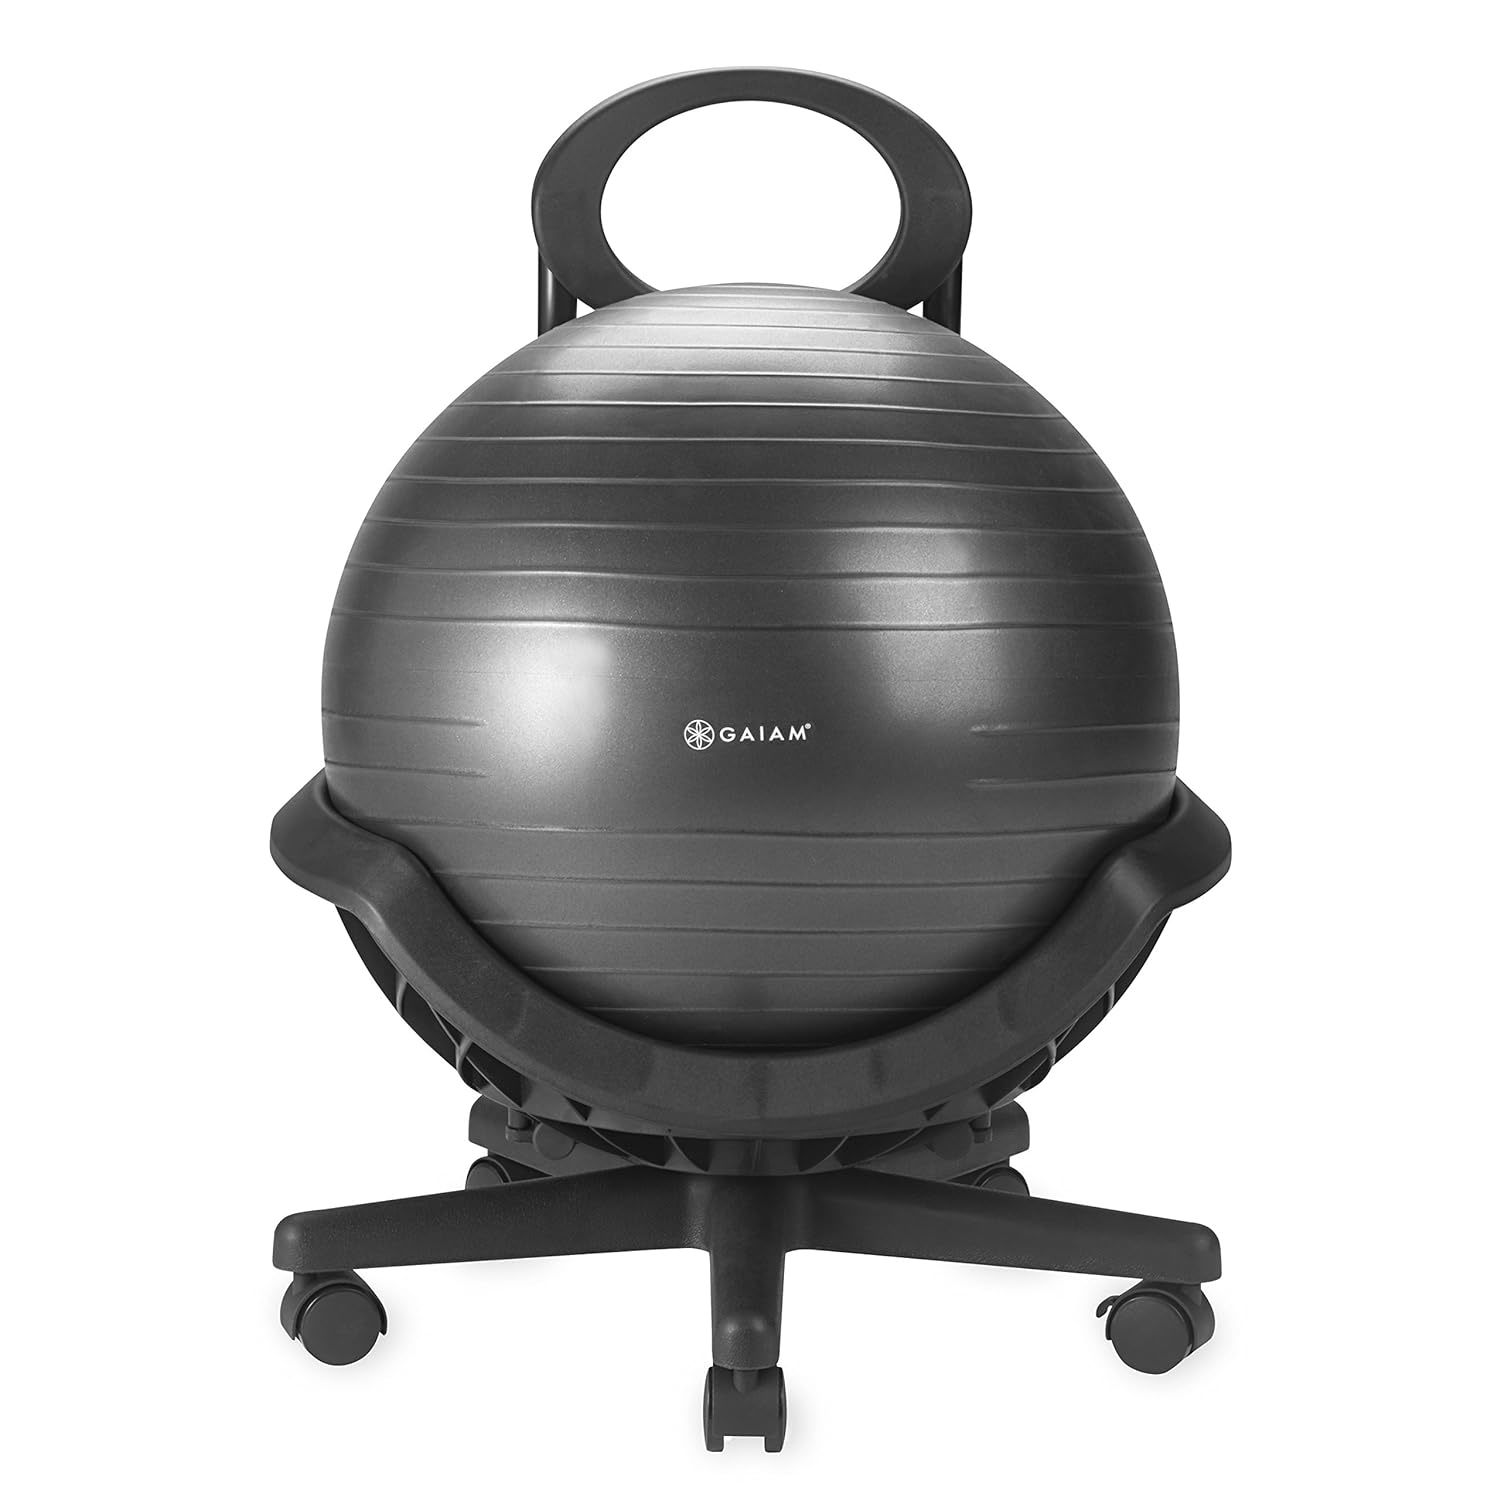 Gaiam Ultimate Balance Ball Chair - Premium Exercise Stability Yoga Ball Ergonom - $184.99